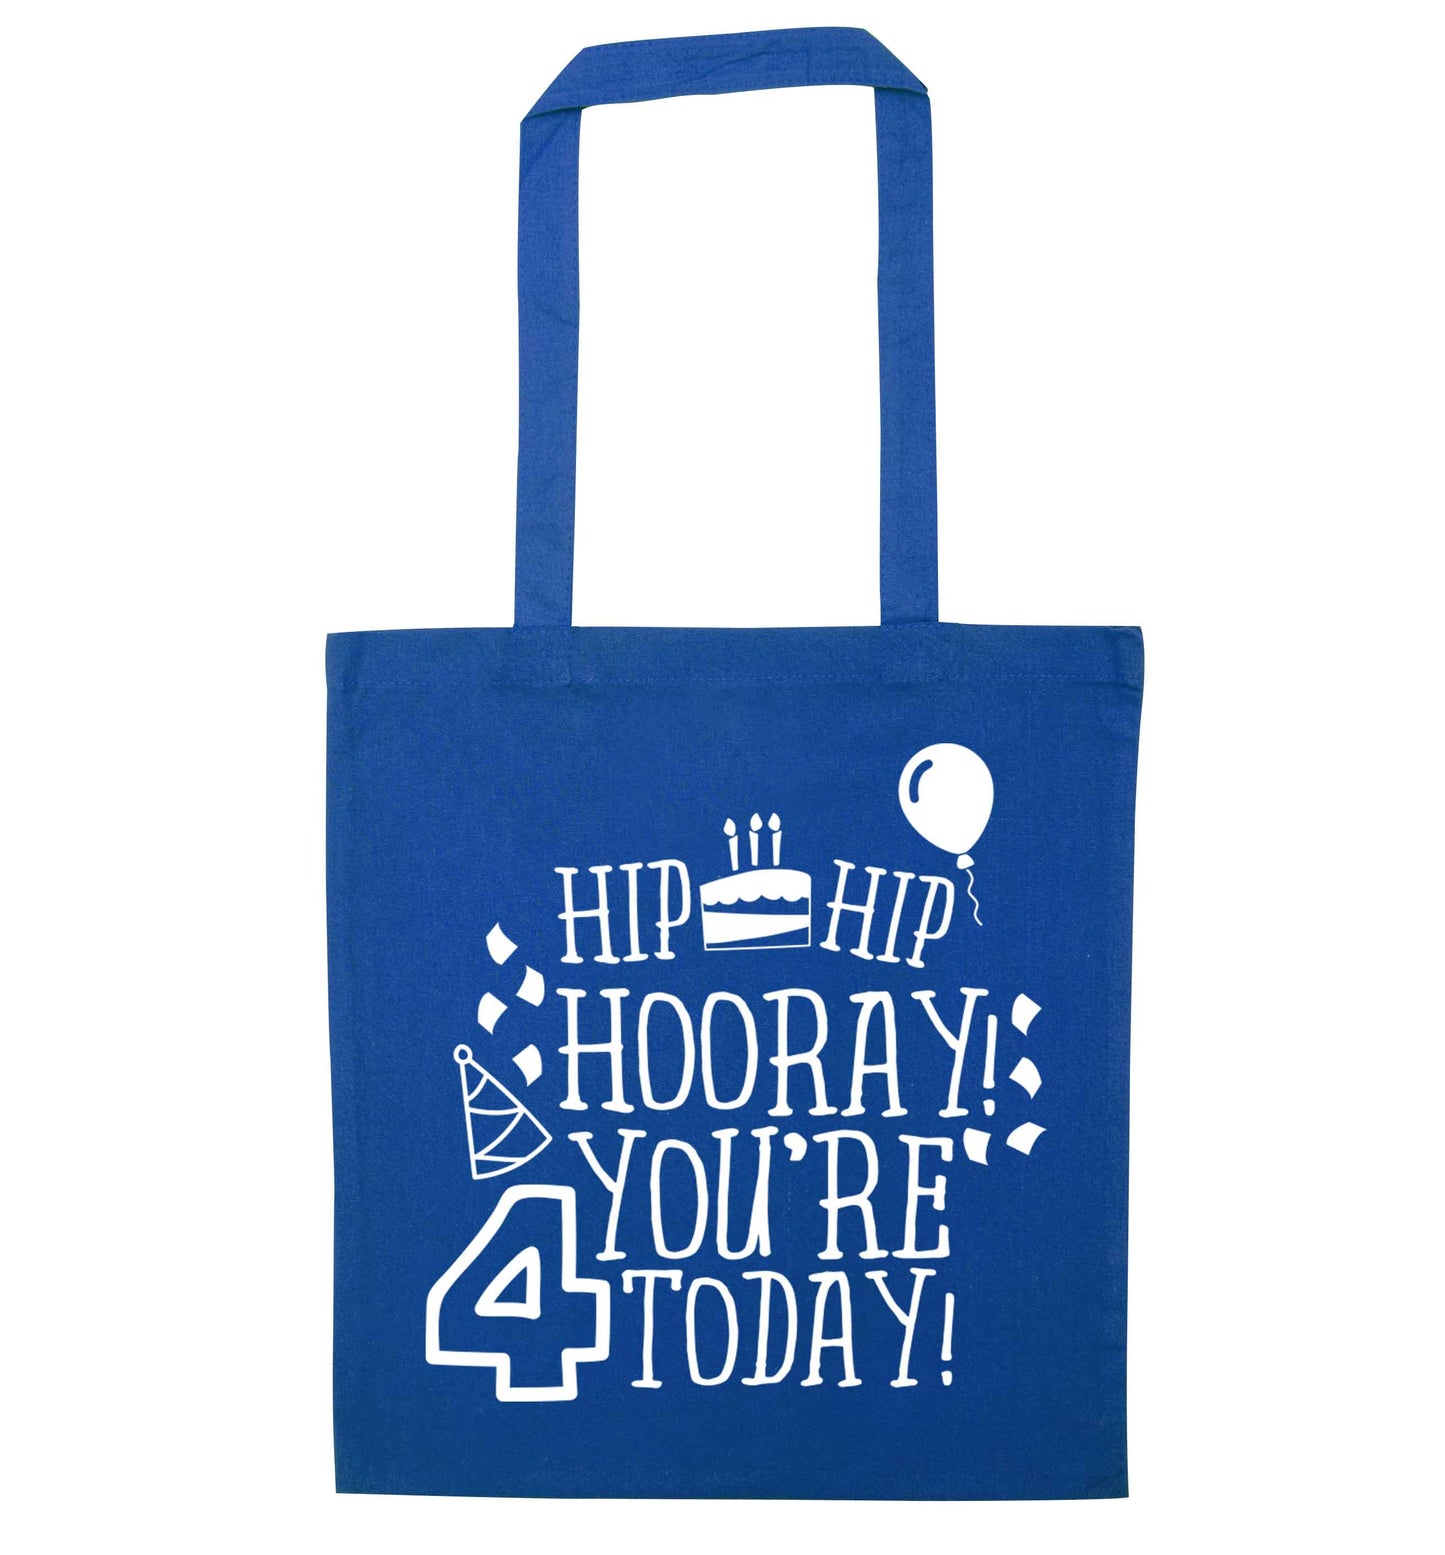 Hip hip hooray you're four today!blue tote bag